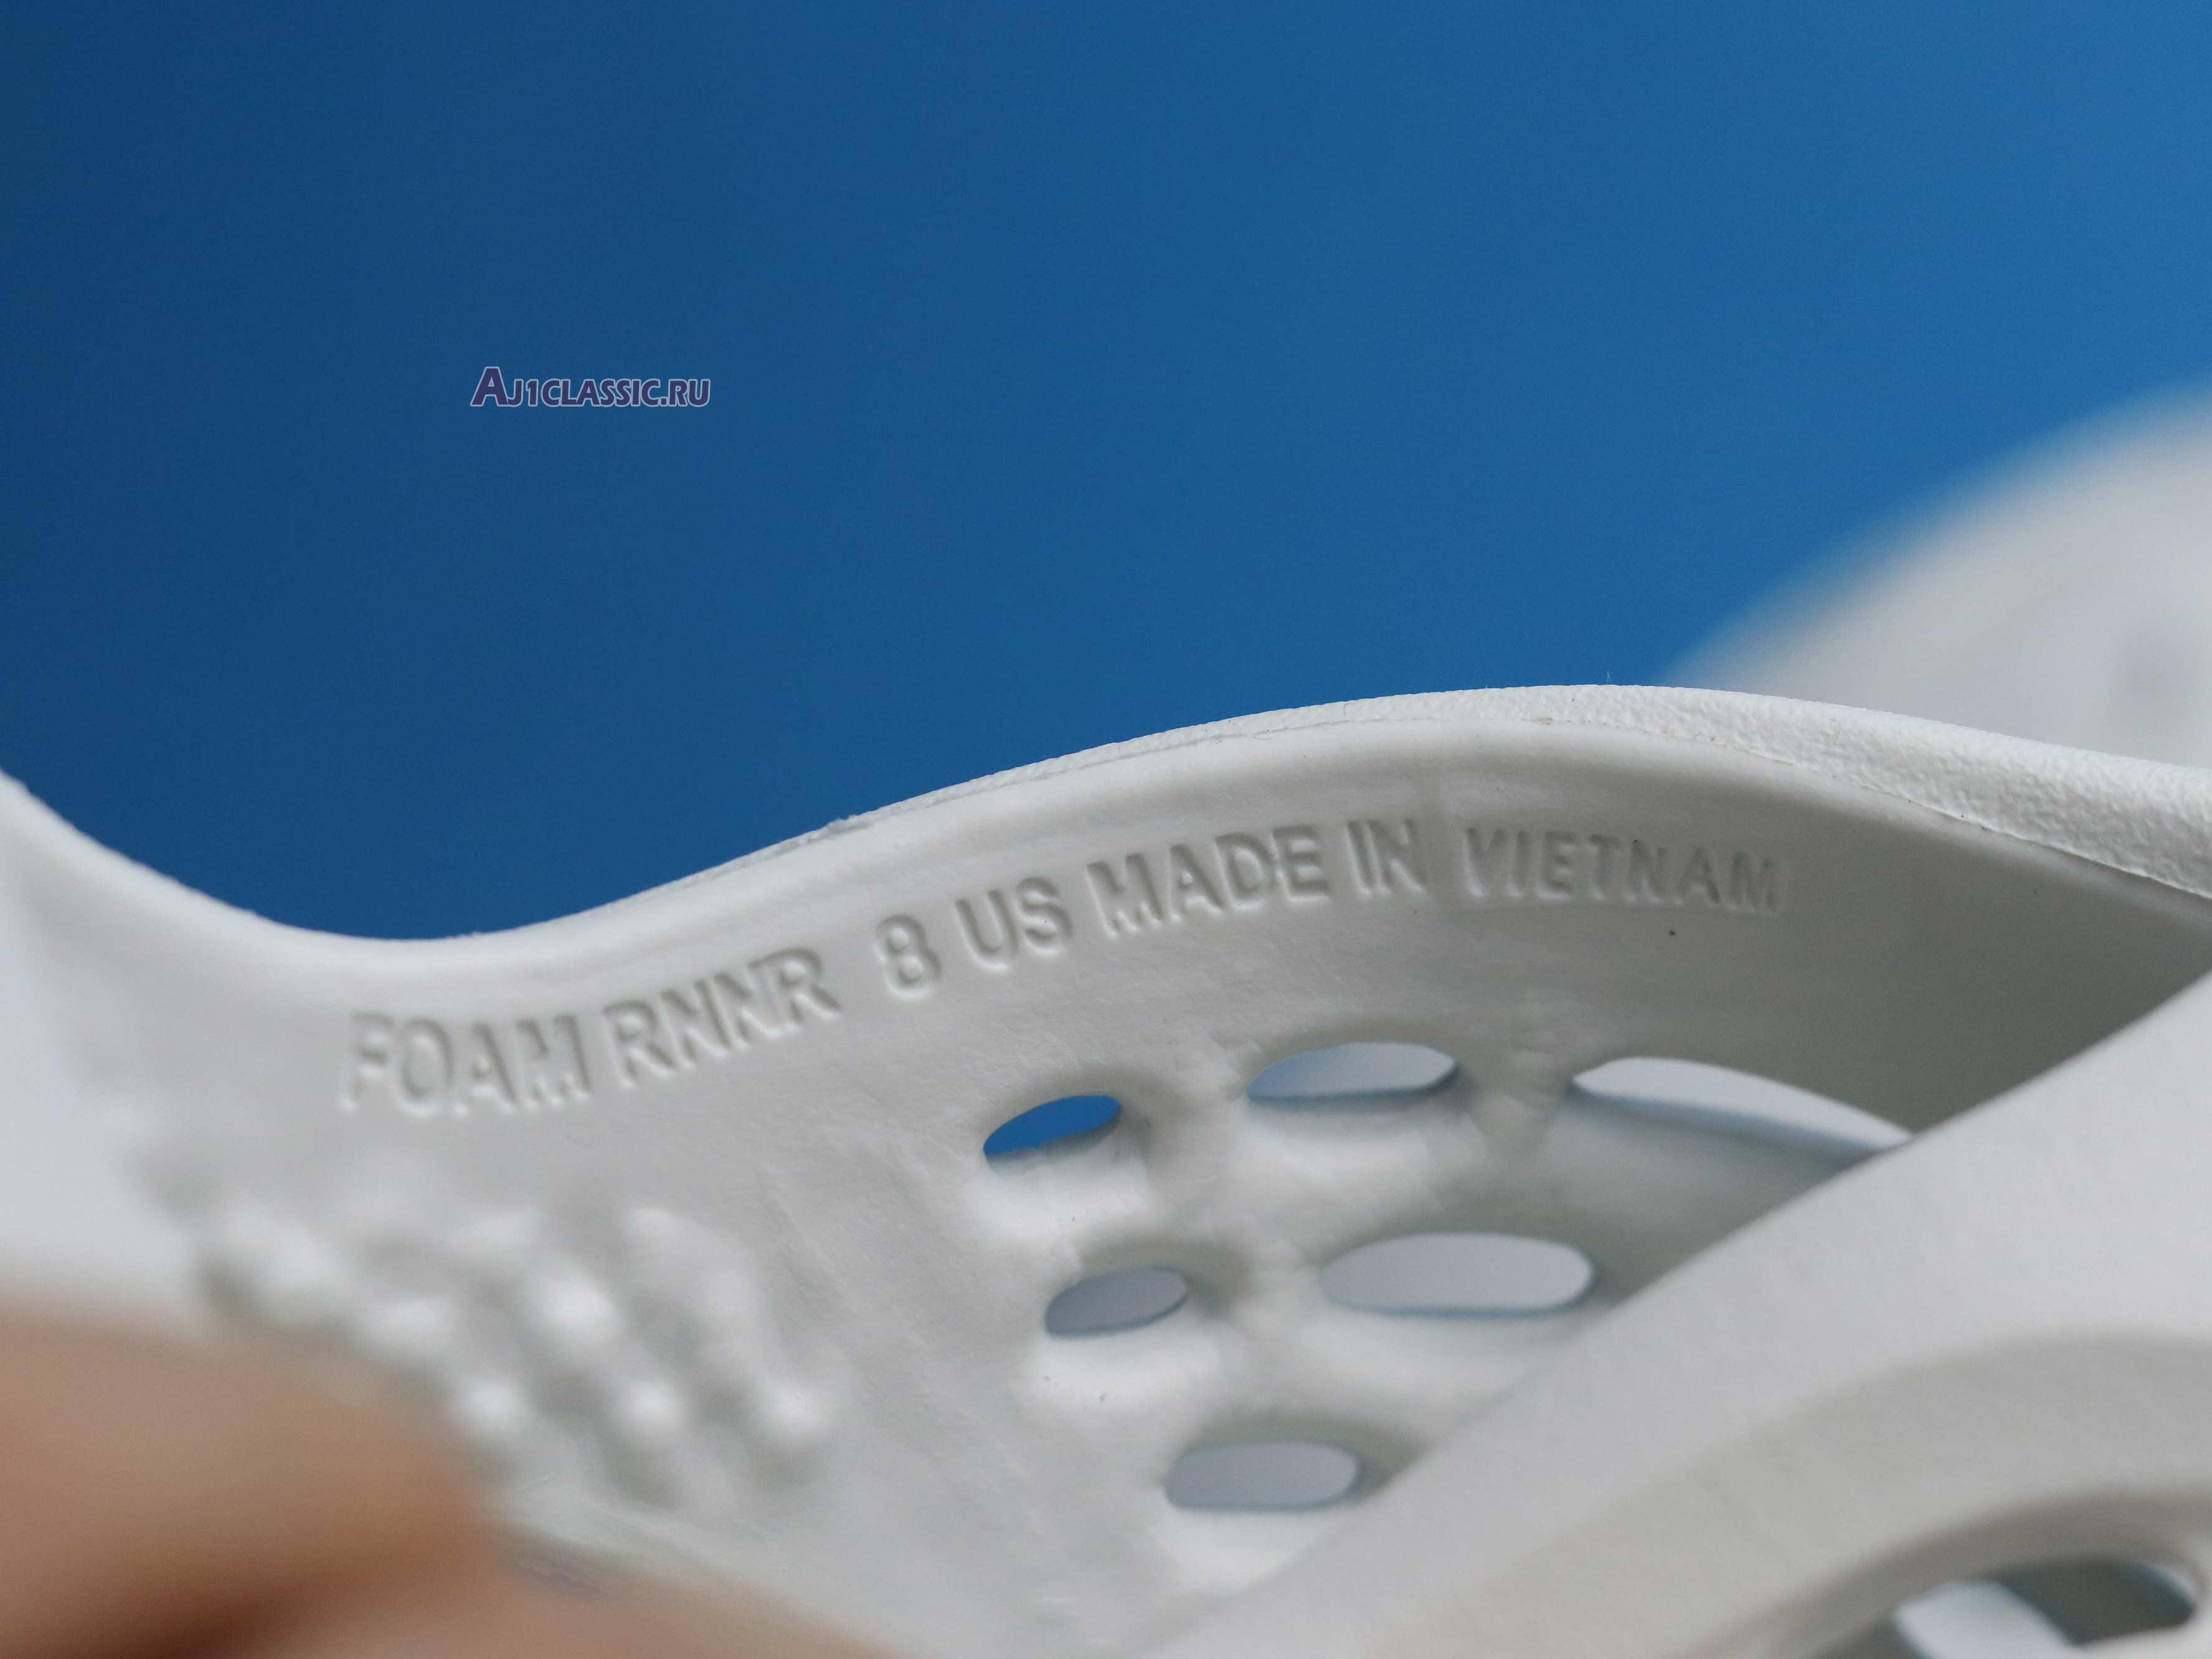 Adidas Yeezy Foam Runner "Ararat" G55486